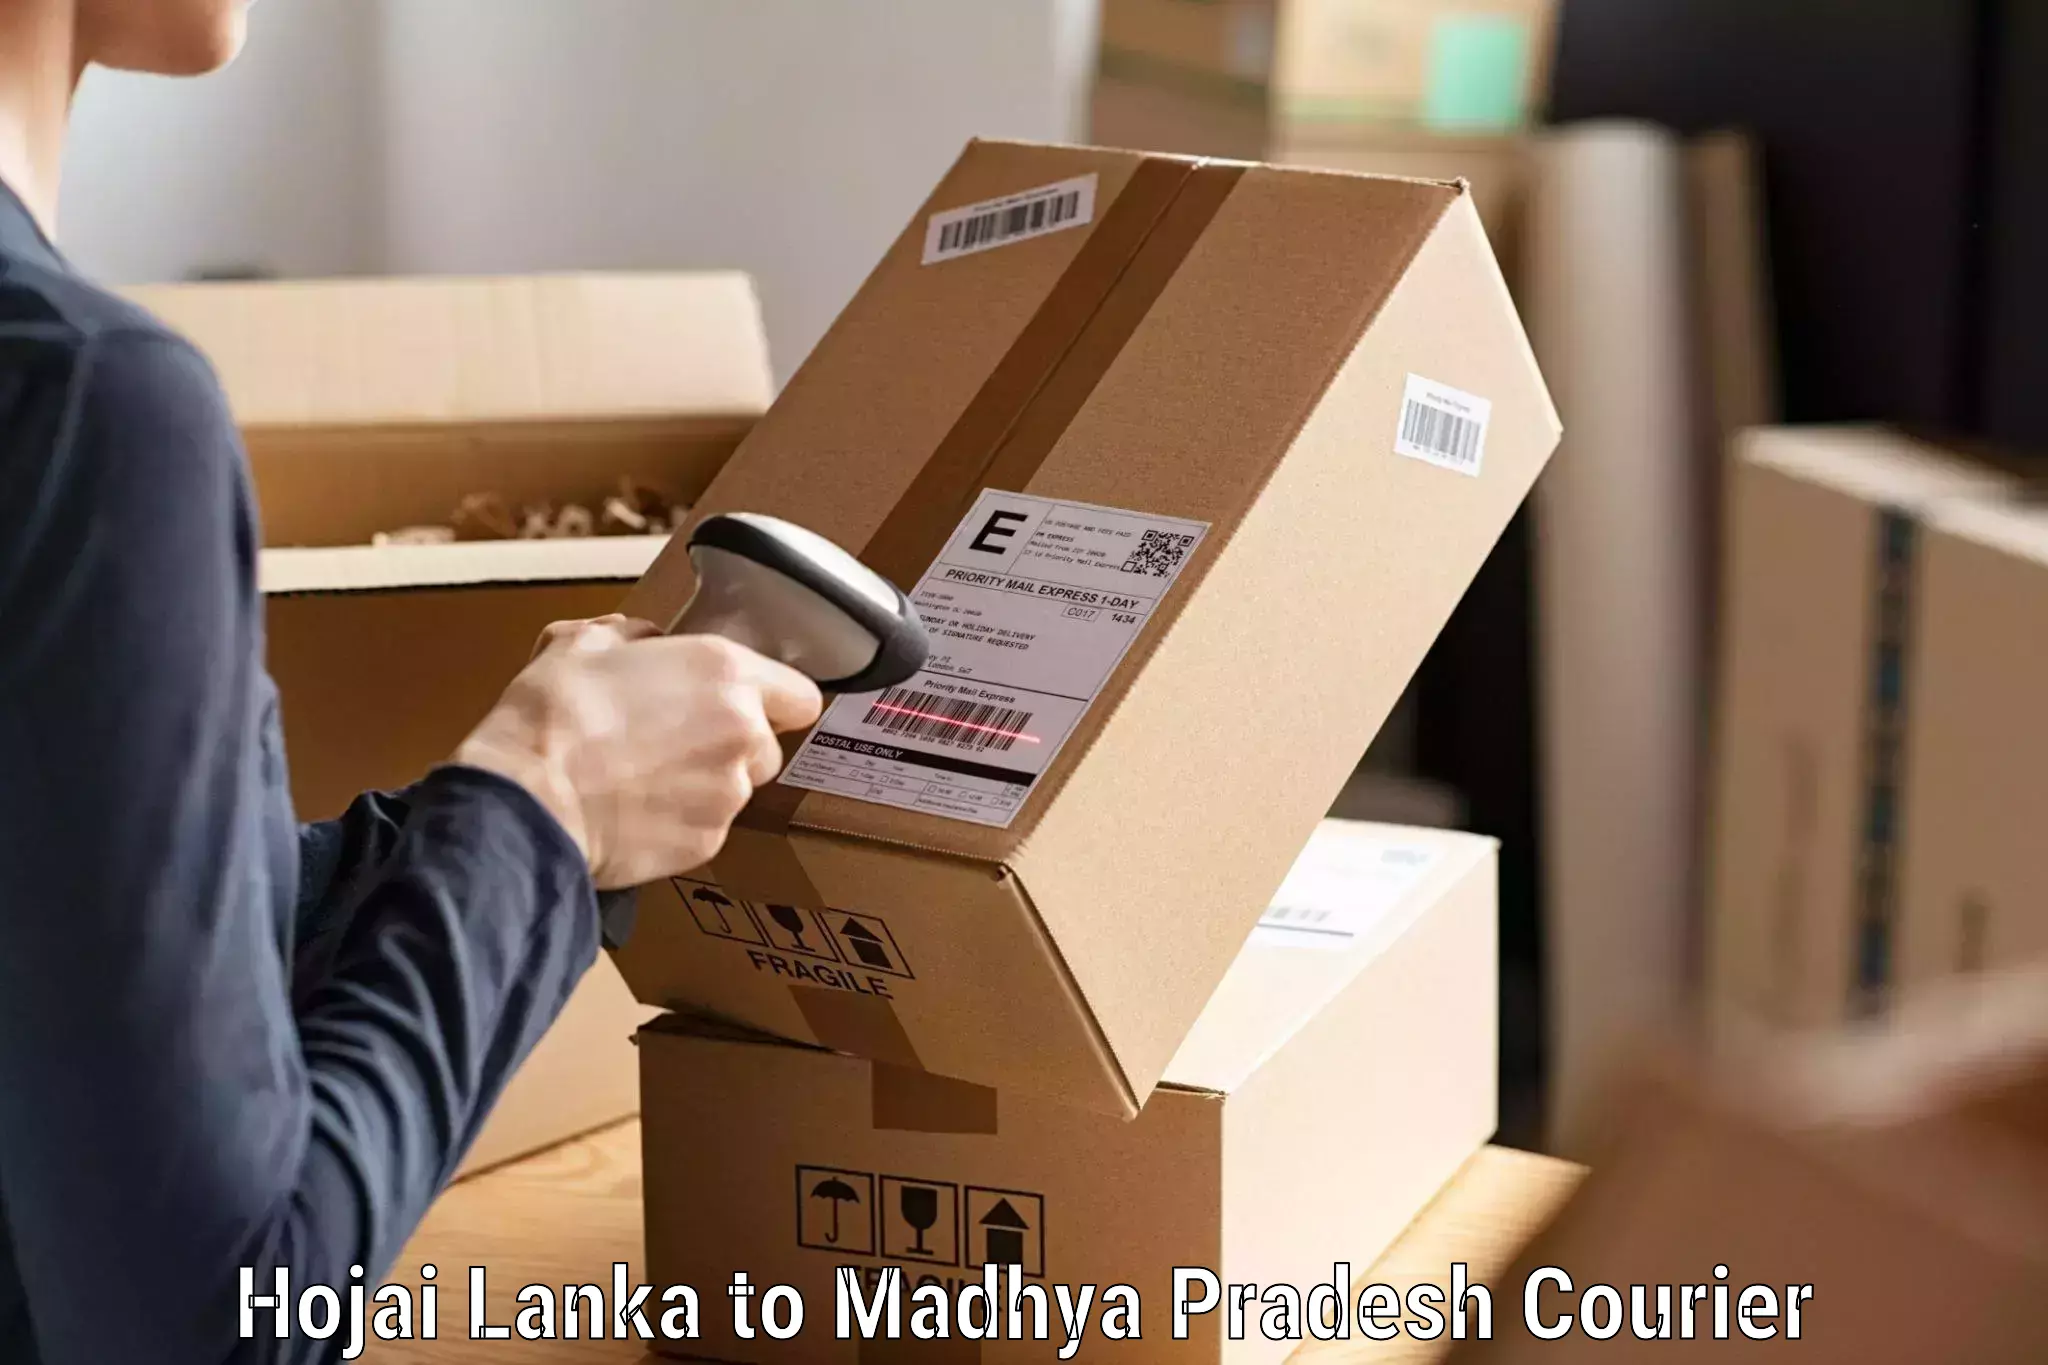 Express package handling Hojai Lanka to Indore